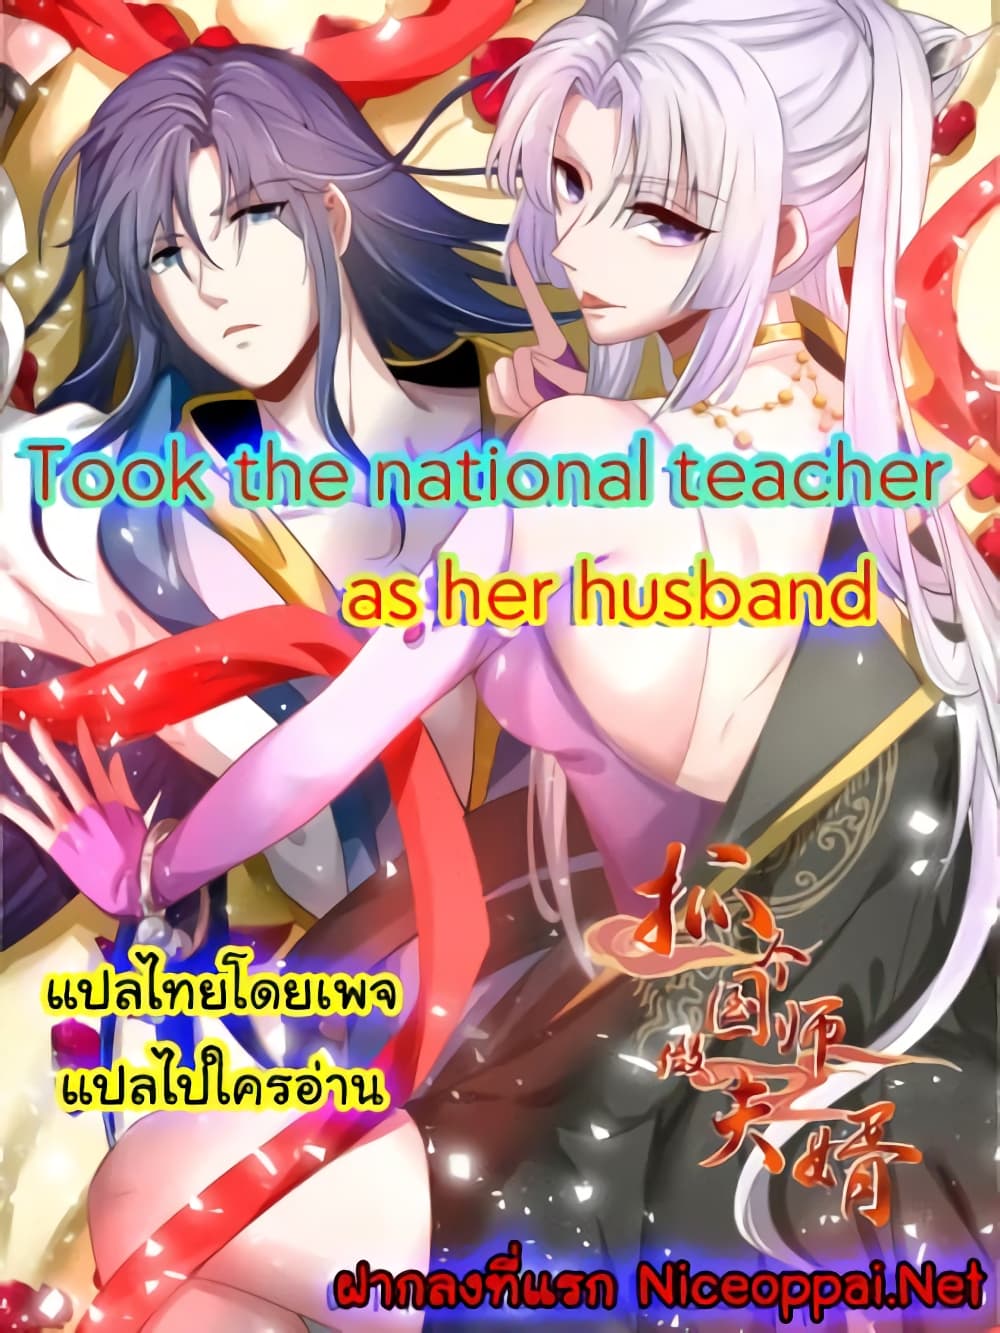 Took the National Teacher as Her Husband 26 (1)